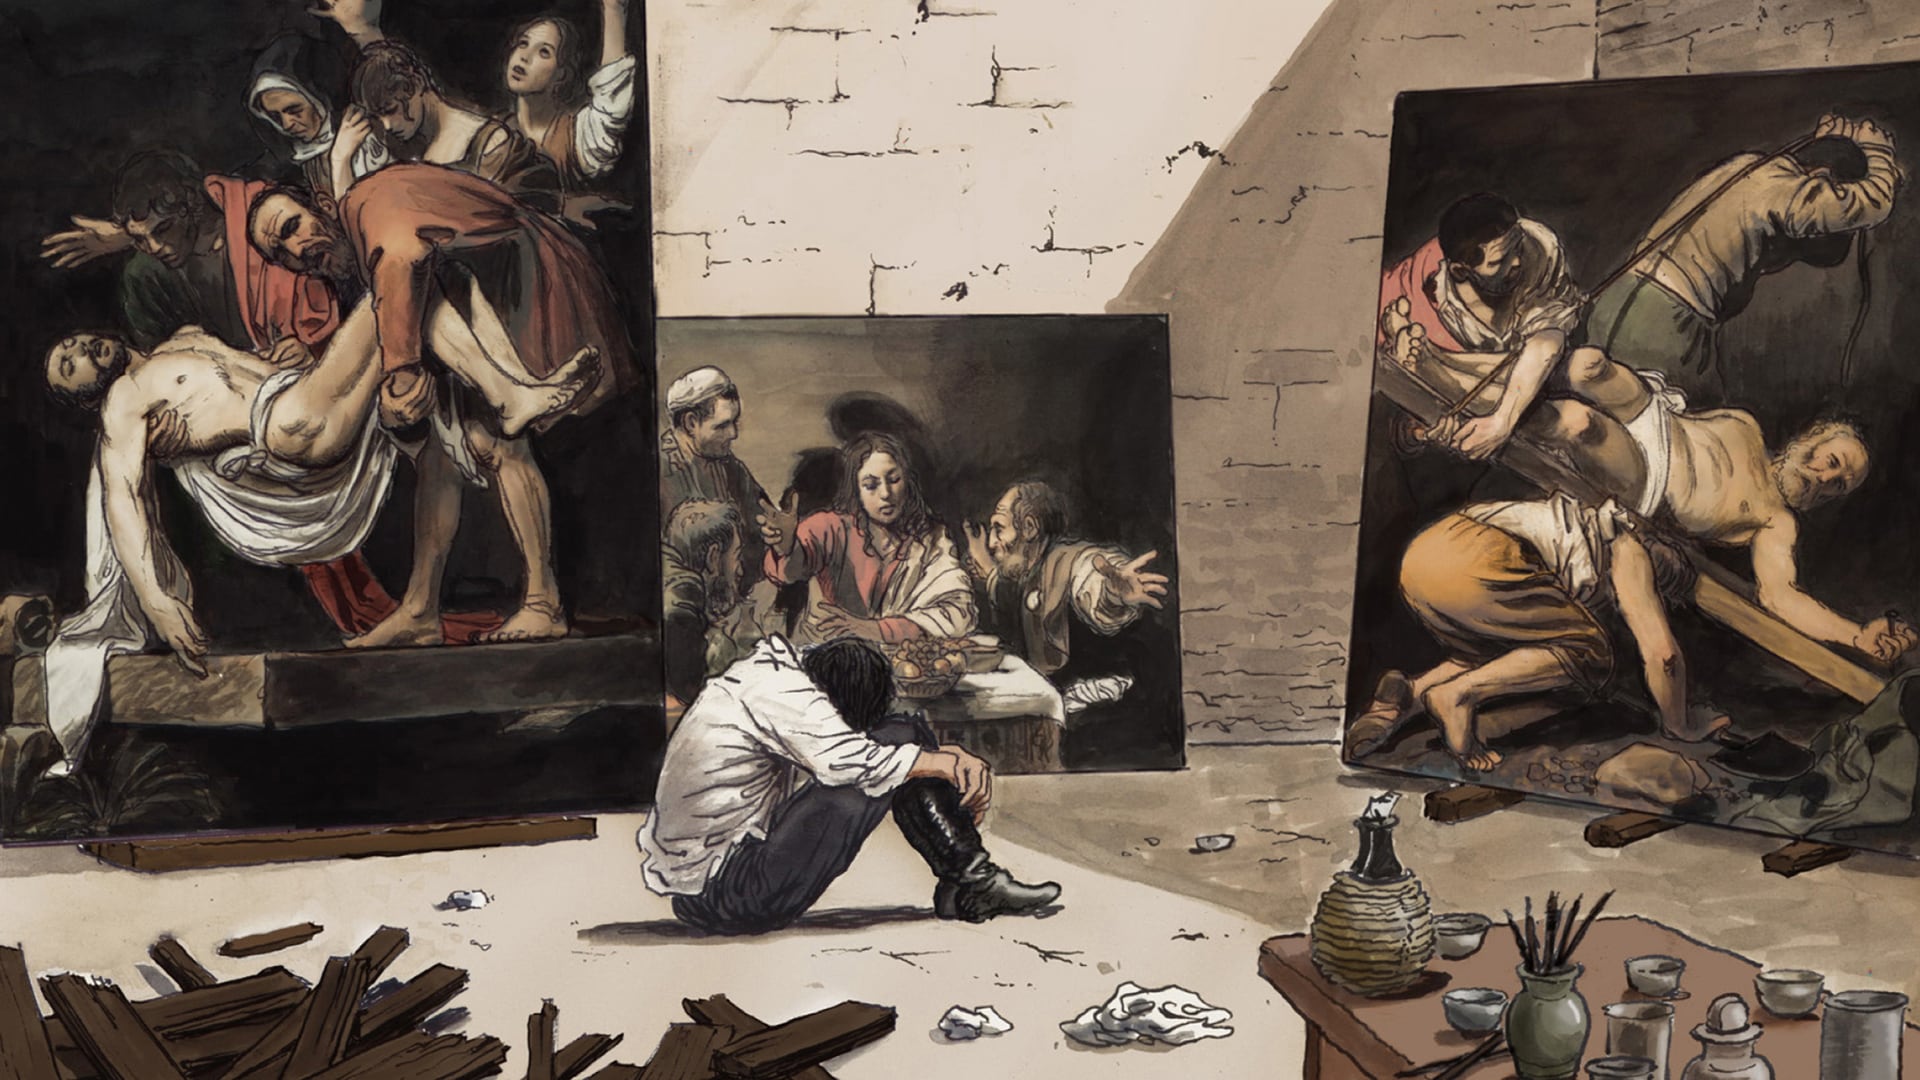 "Caravaggio - La tavolozza e la spada" di Milo Manara